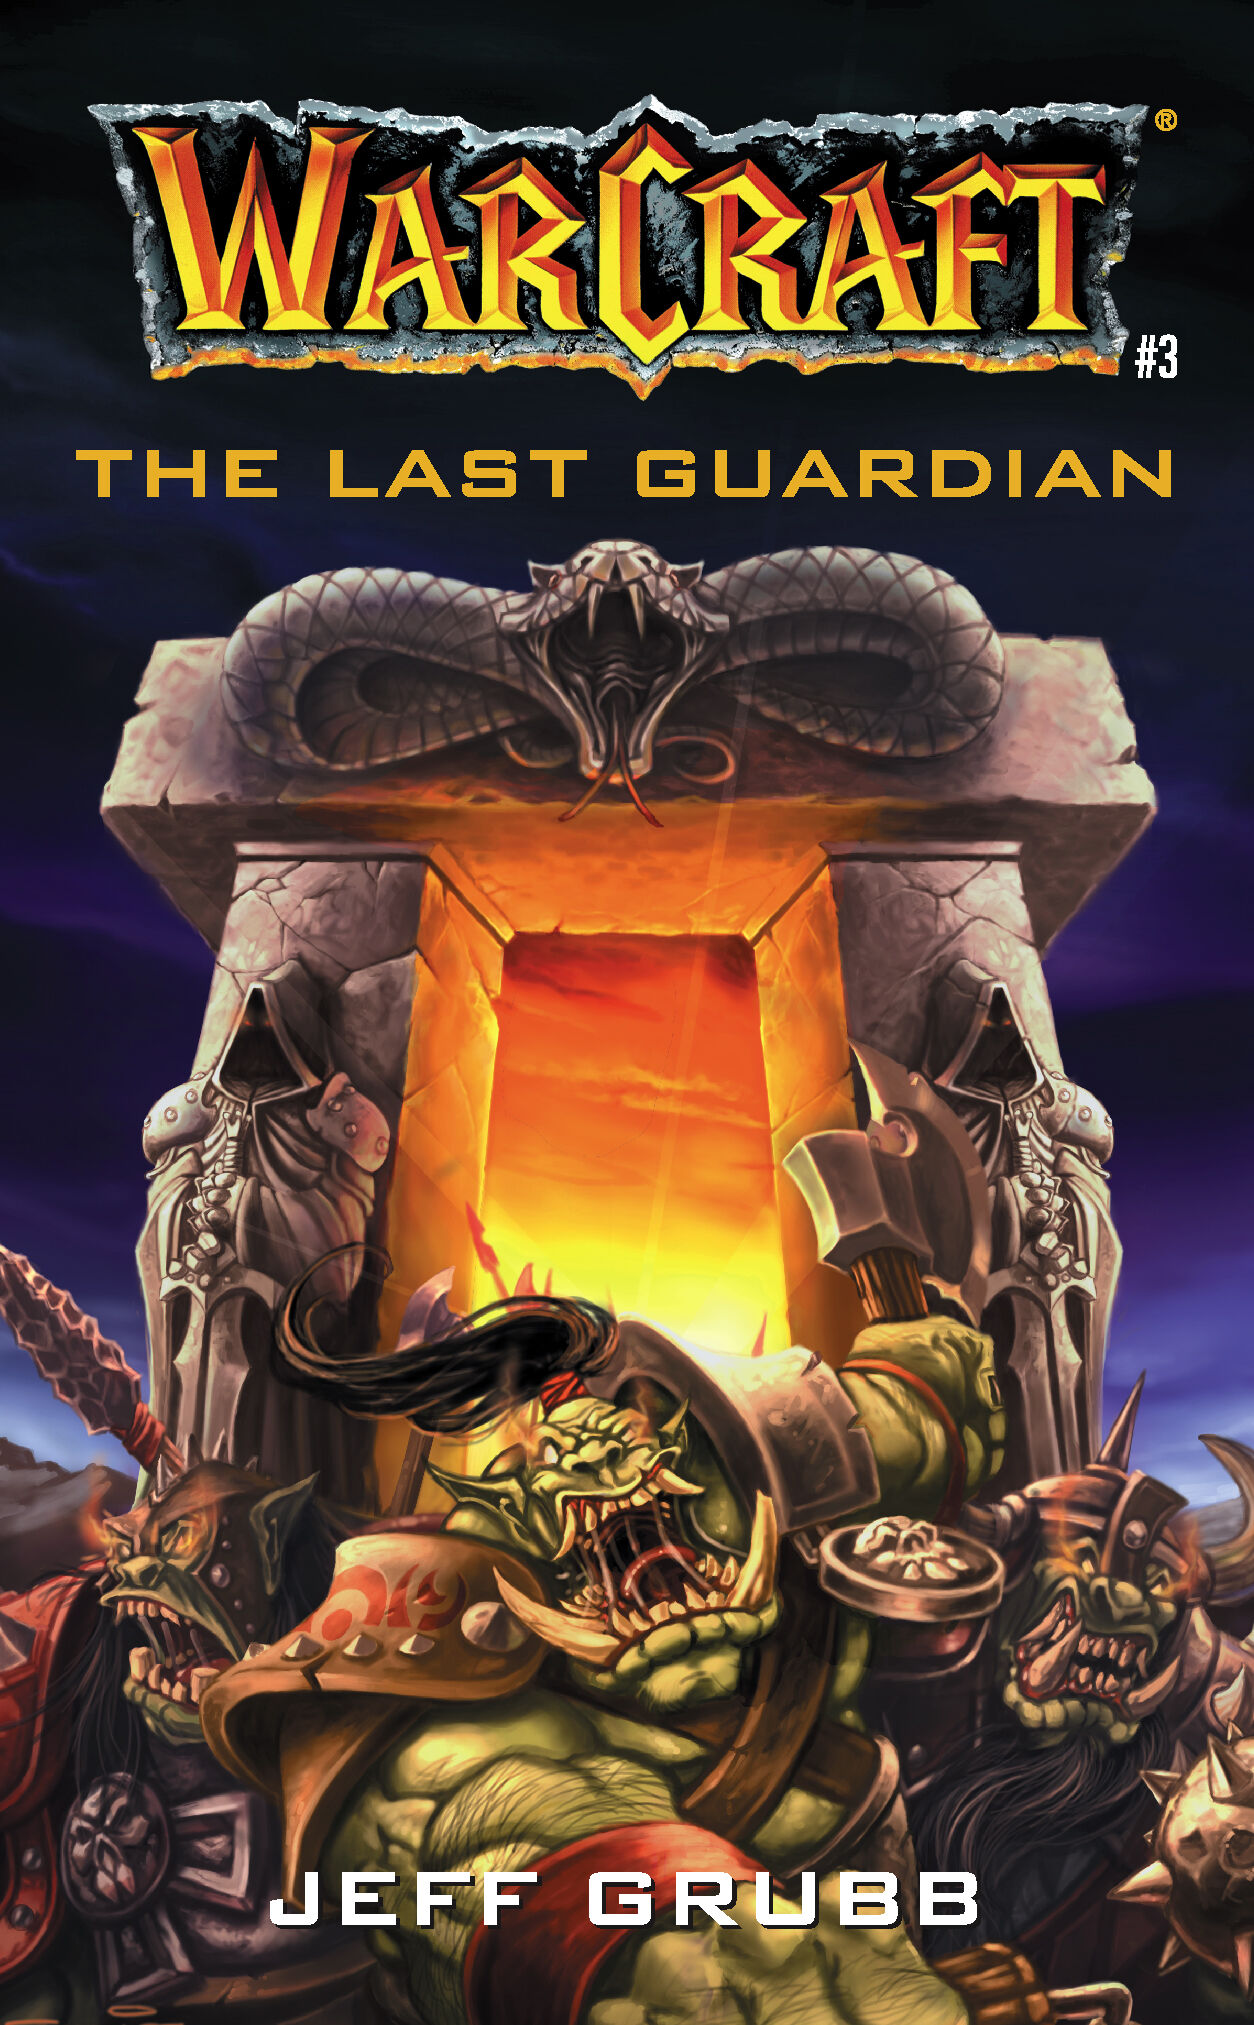 The Last Guardian (novel) - Wikipedia